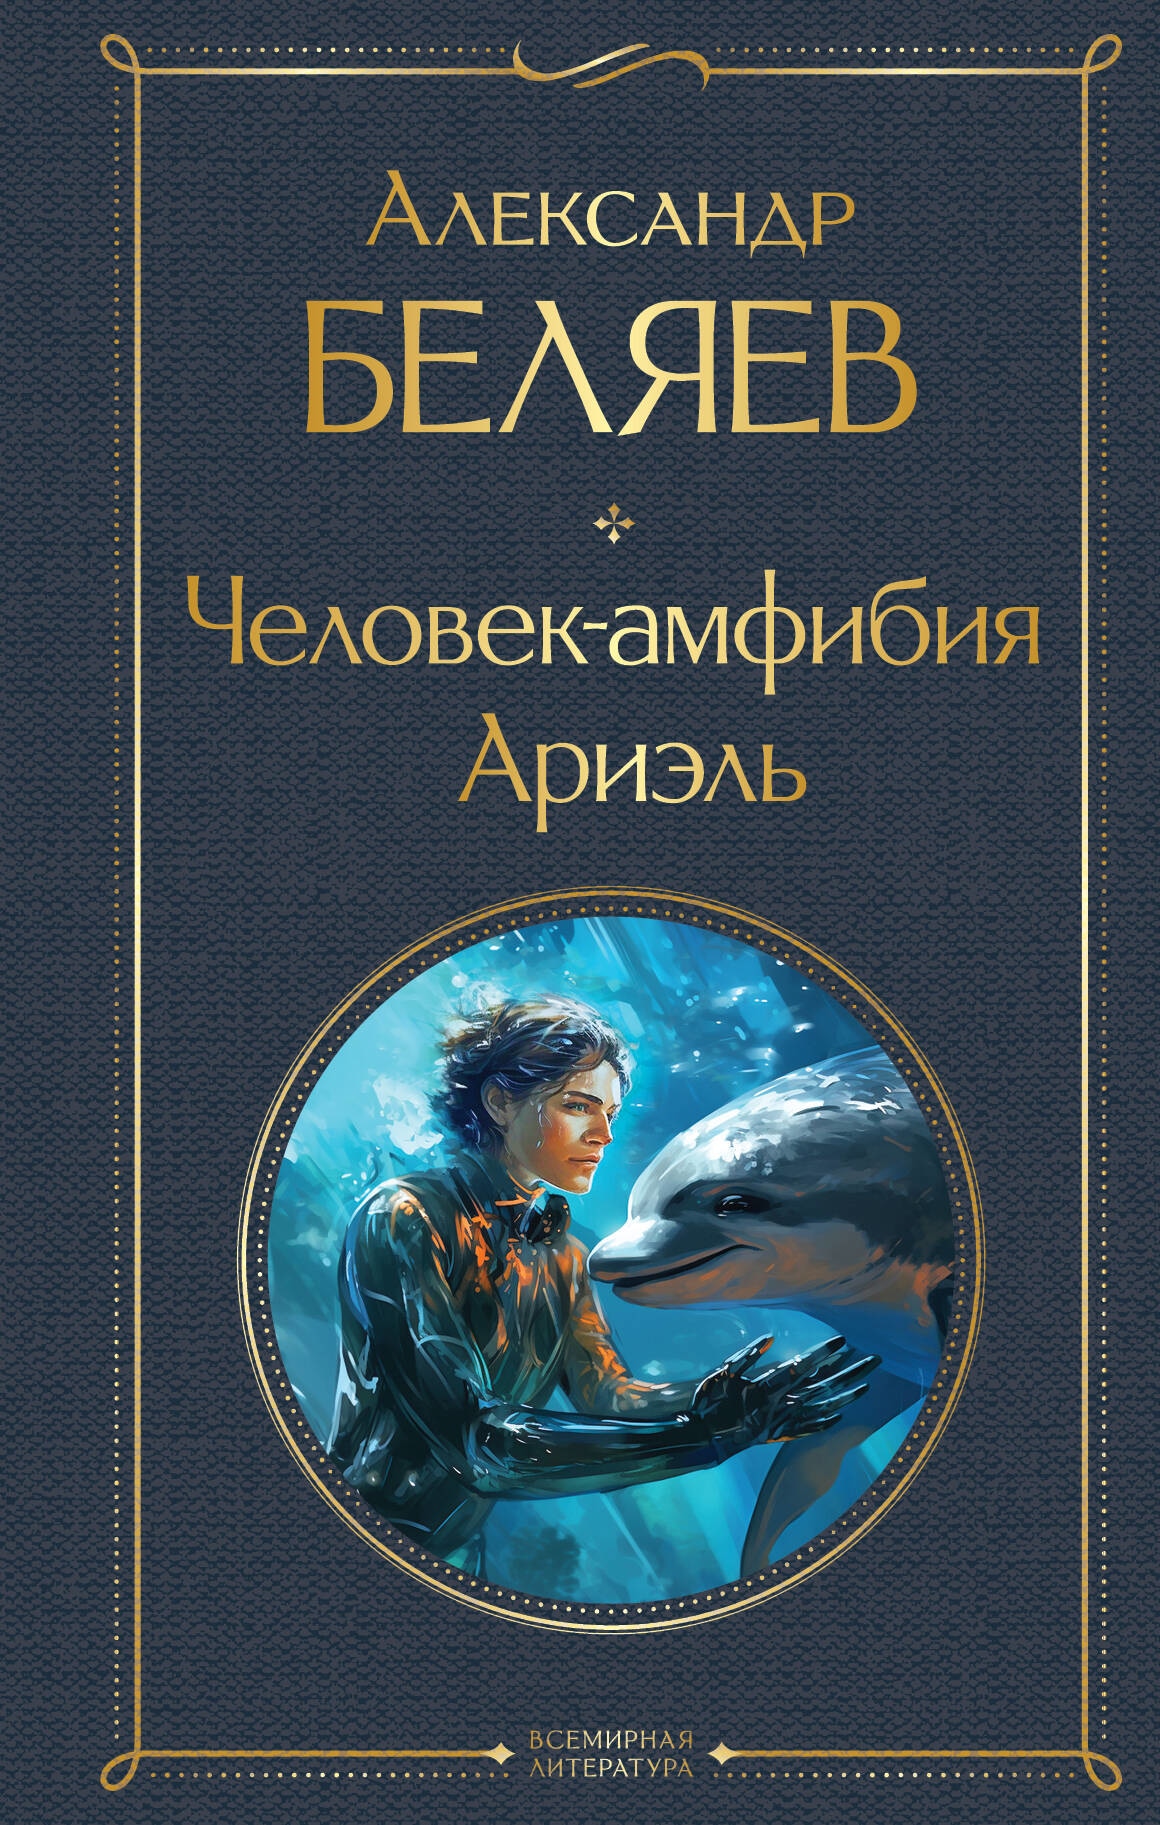 Книга «Человек-амфибия. Ариэль» Александр Беляев — 2023 г.